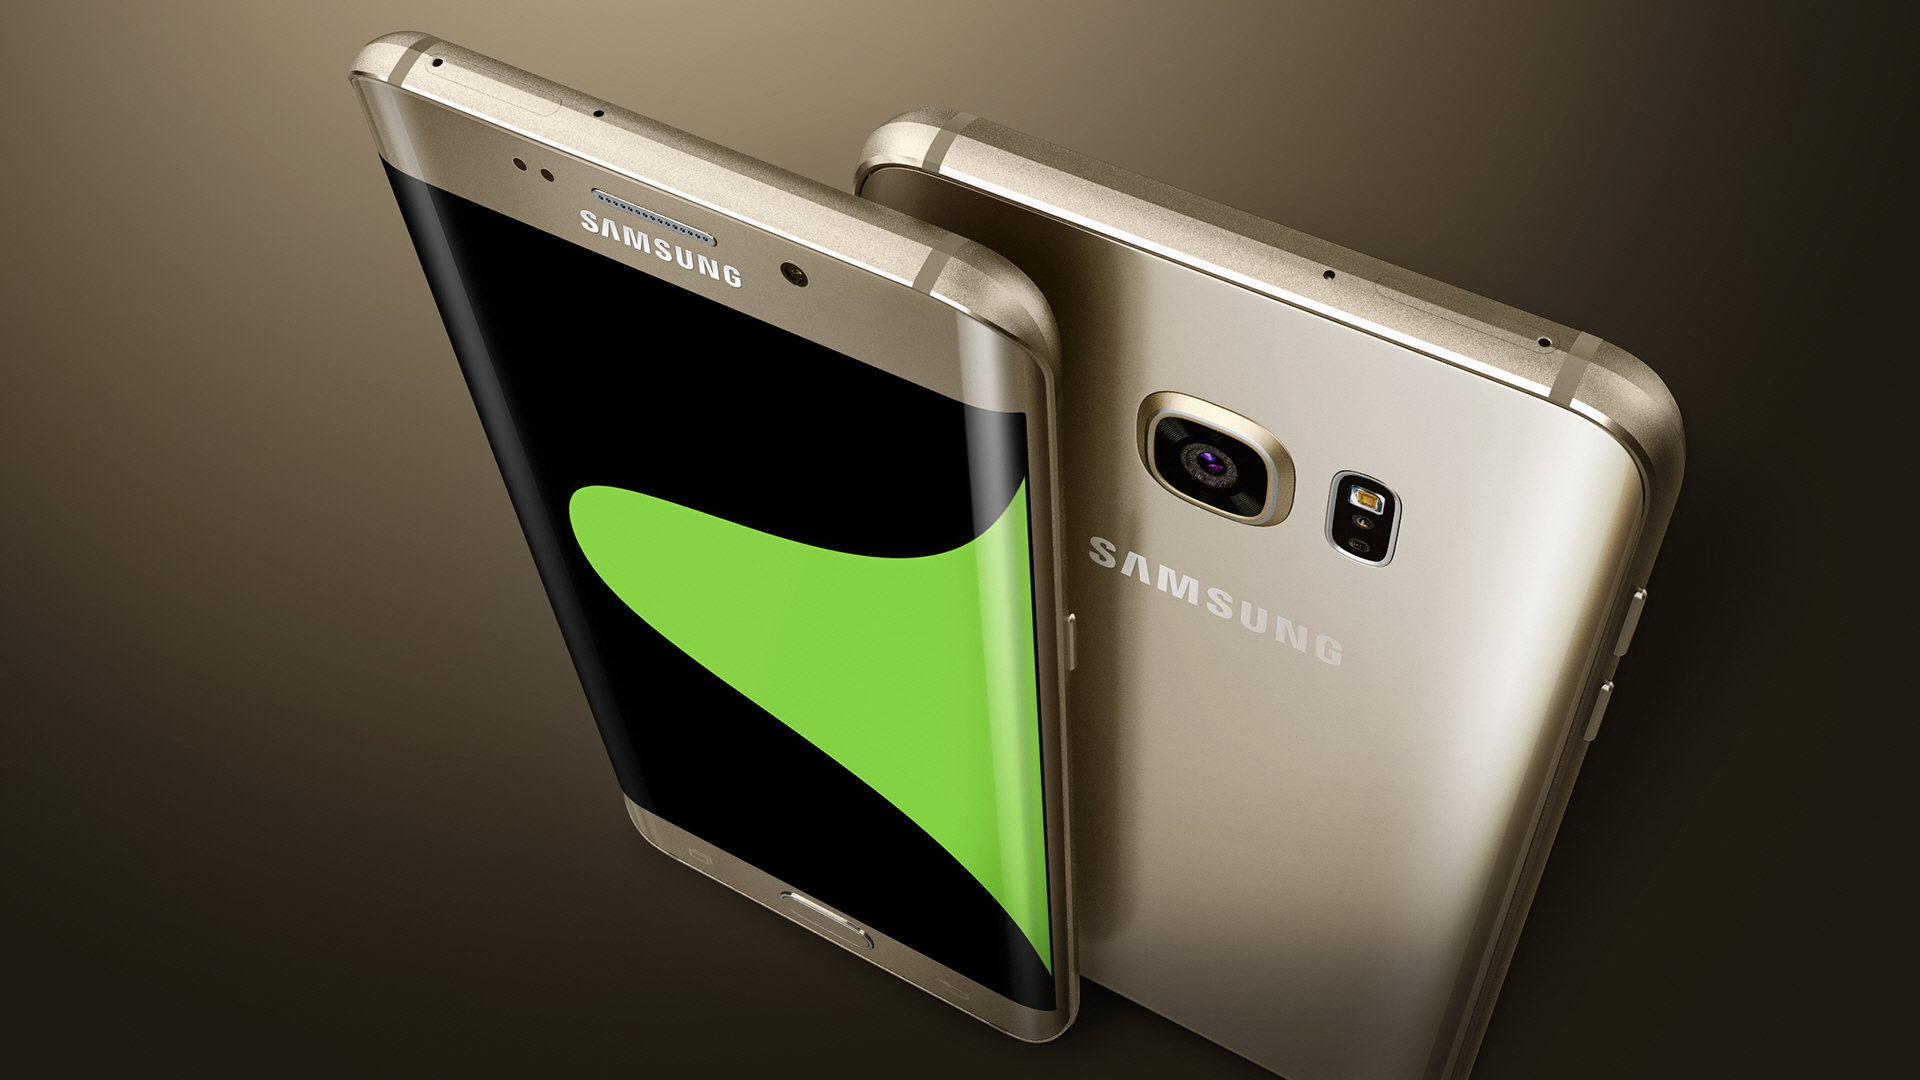 Samsung Galaxy s6 Edge+